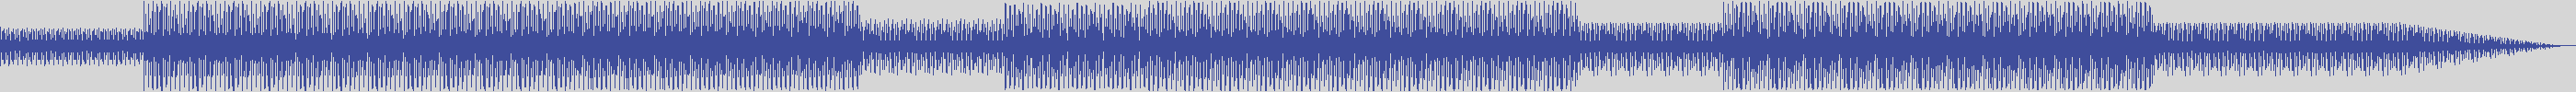 nf_boyz_records [NFY057] Alvin King - Unique [Tribal Mix] audio wave form